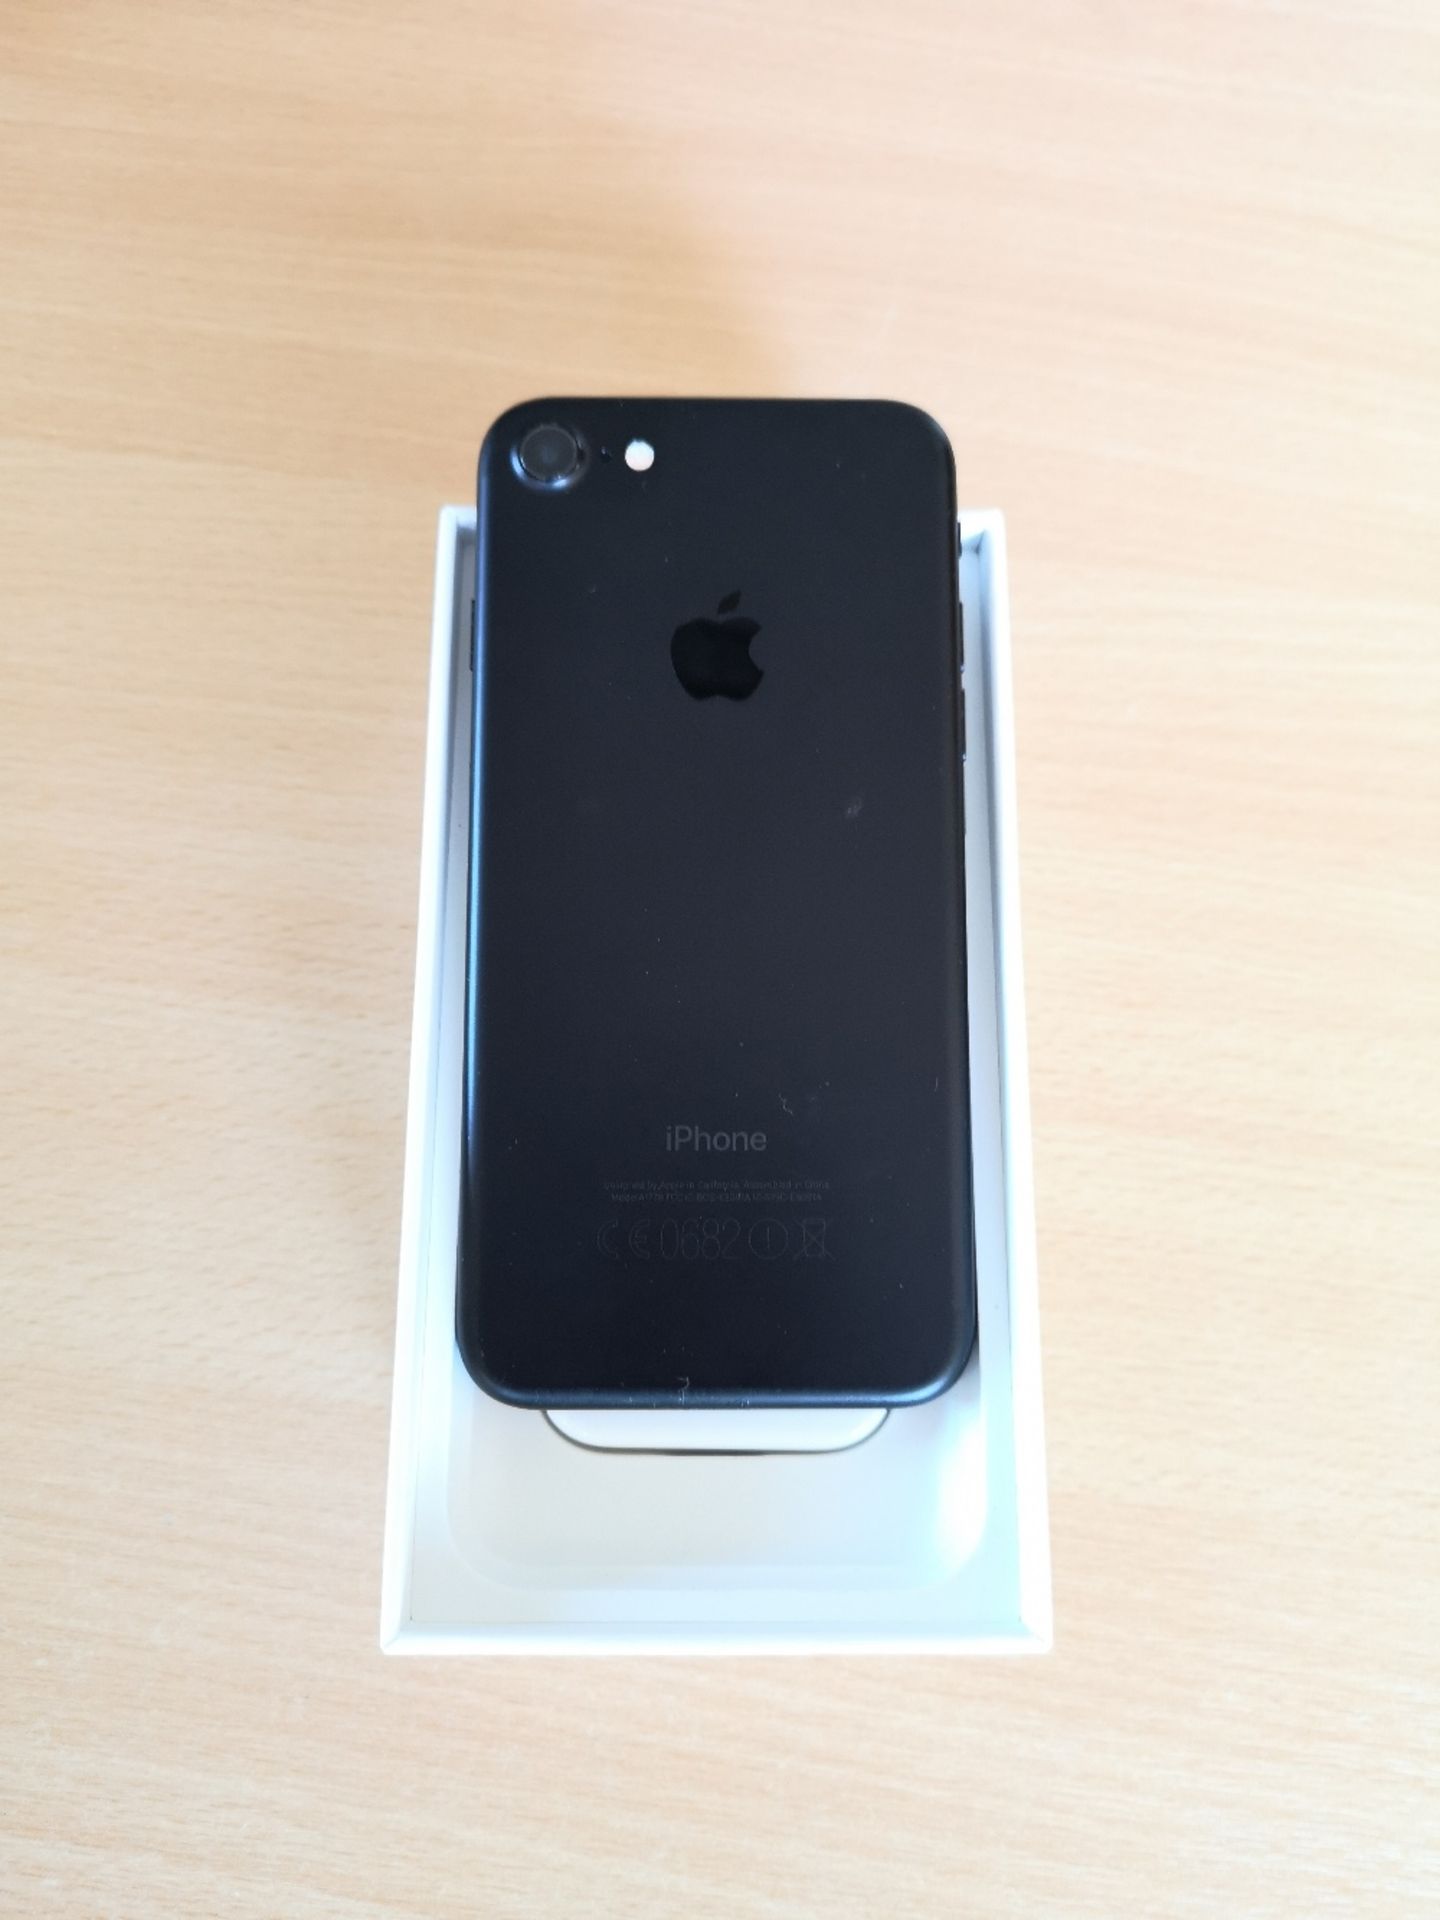 Apple iPhone 7 - Black - 32GB - Image 2 of 5